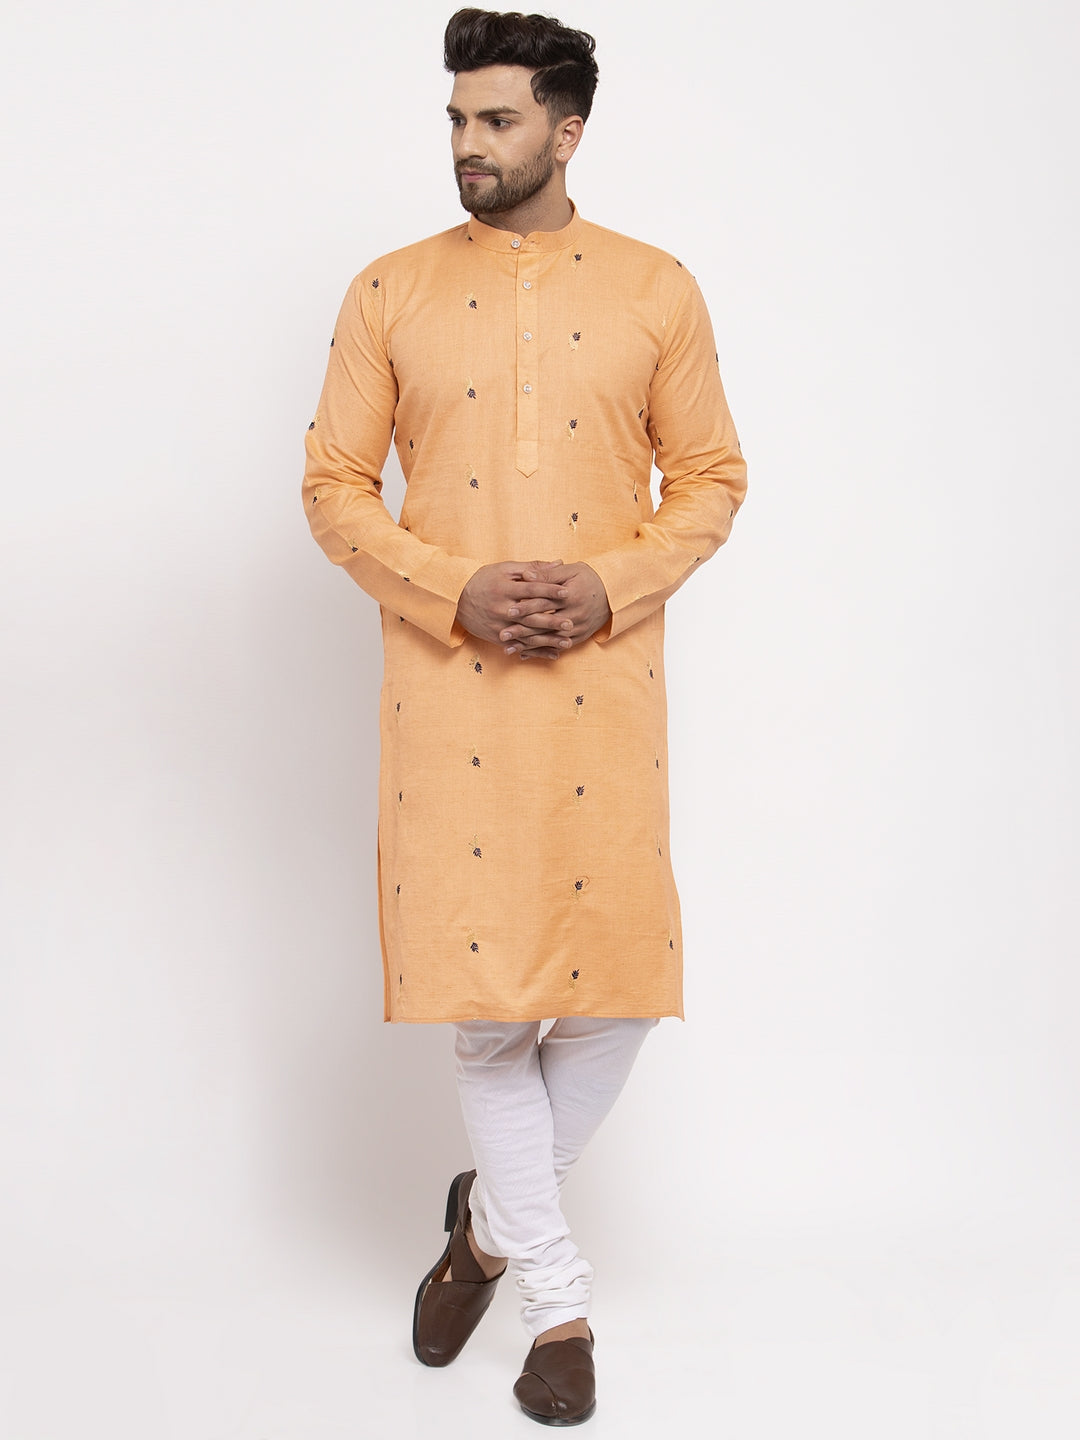 Jompers Men's Orange Printed Cotton Kurta Payjama Sets